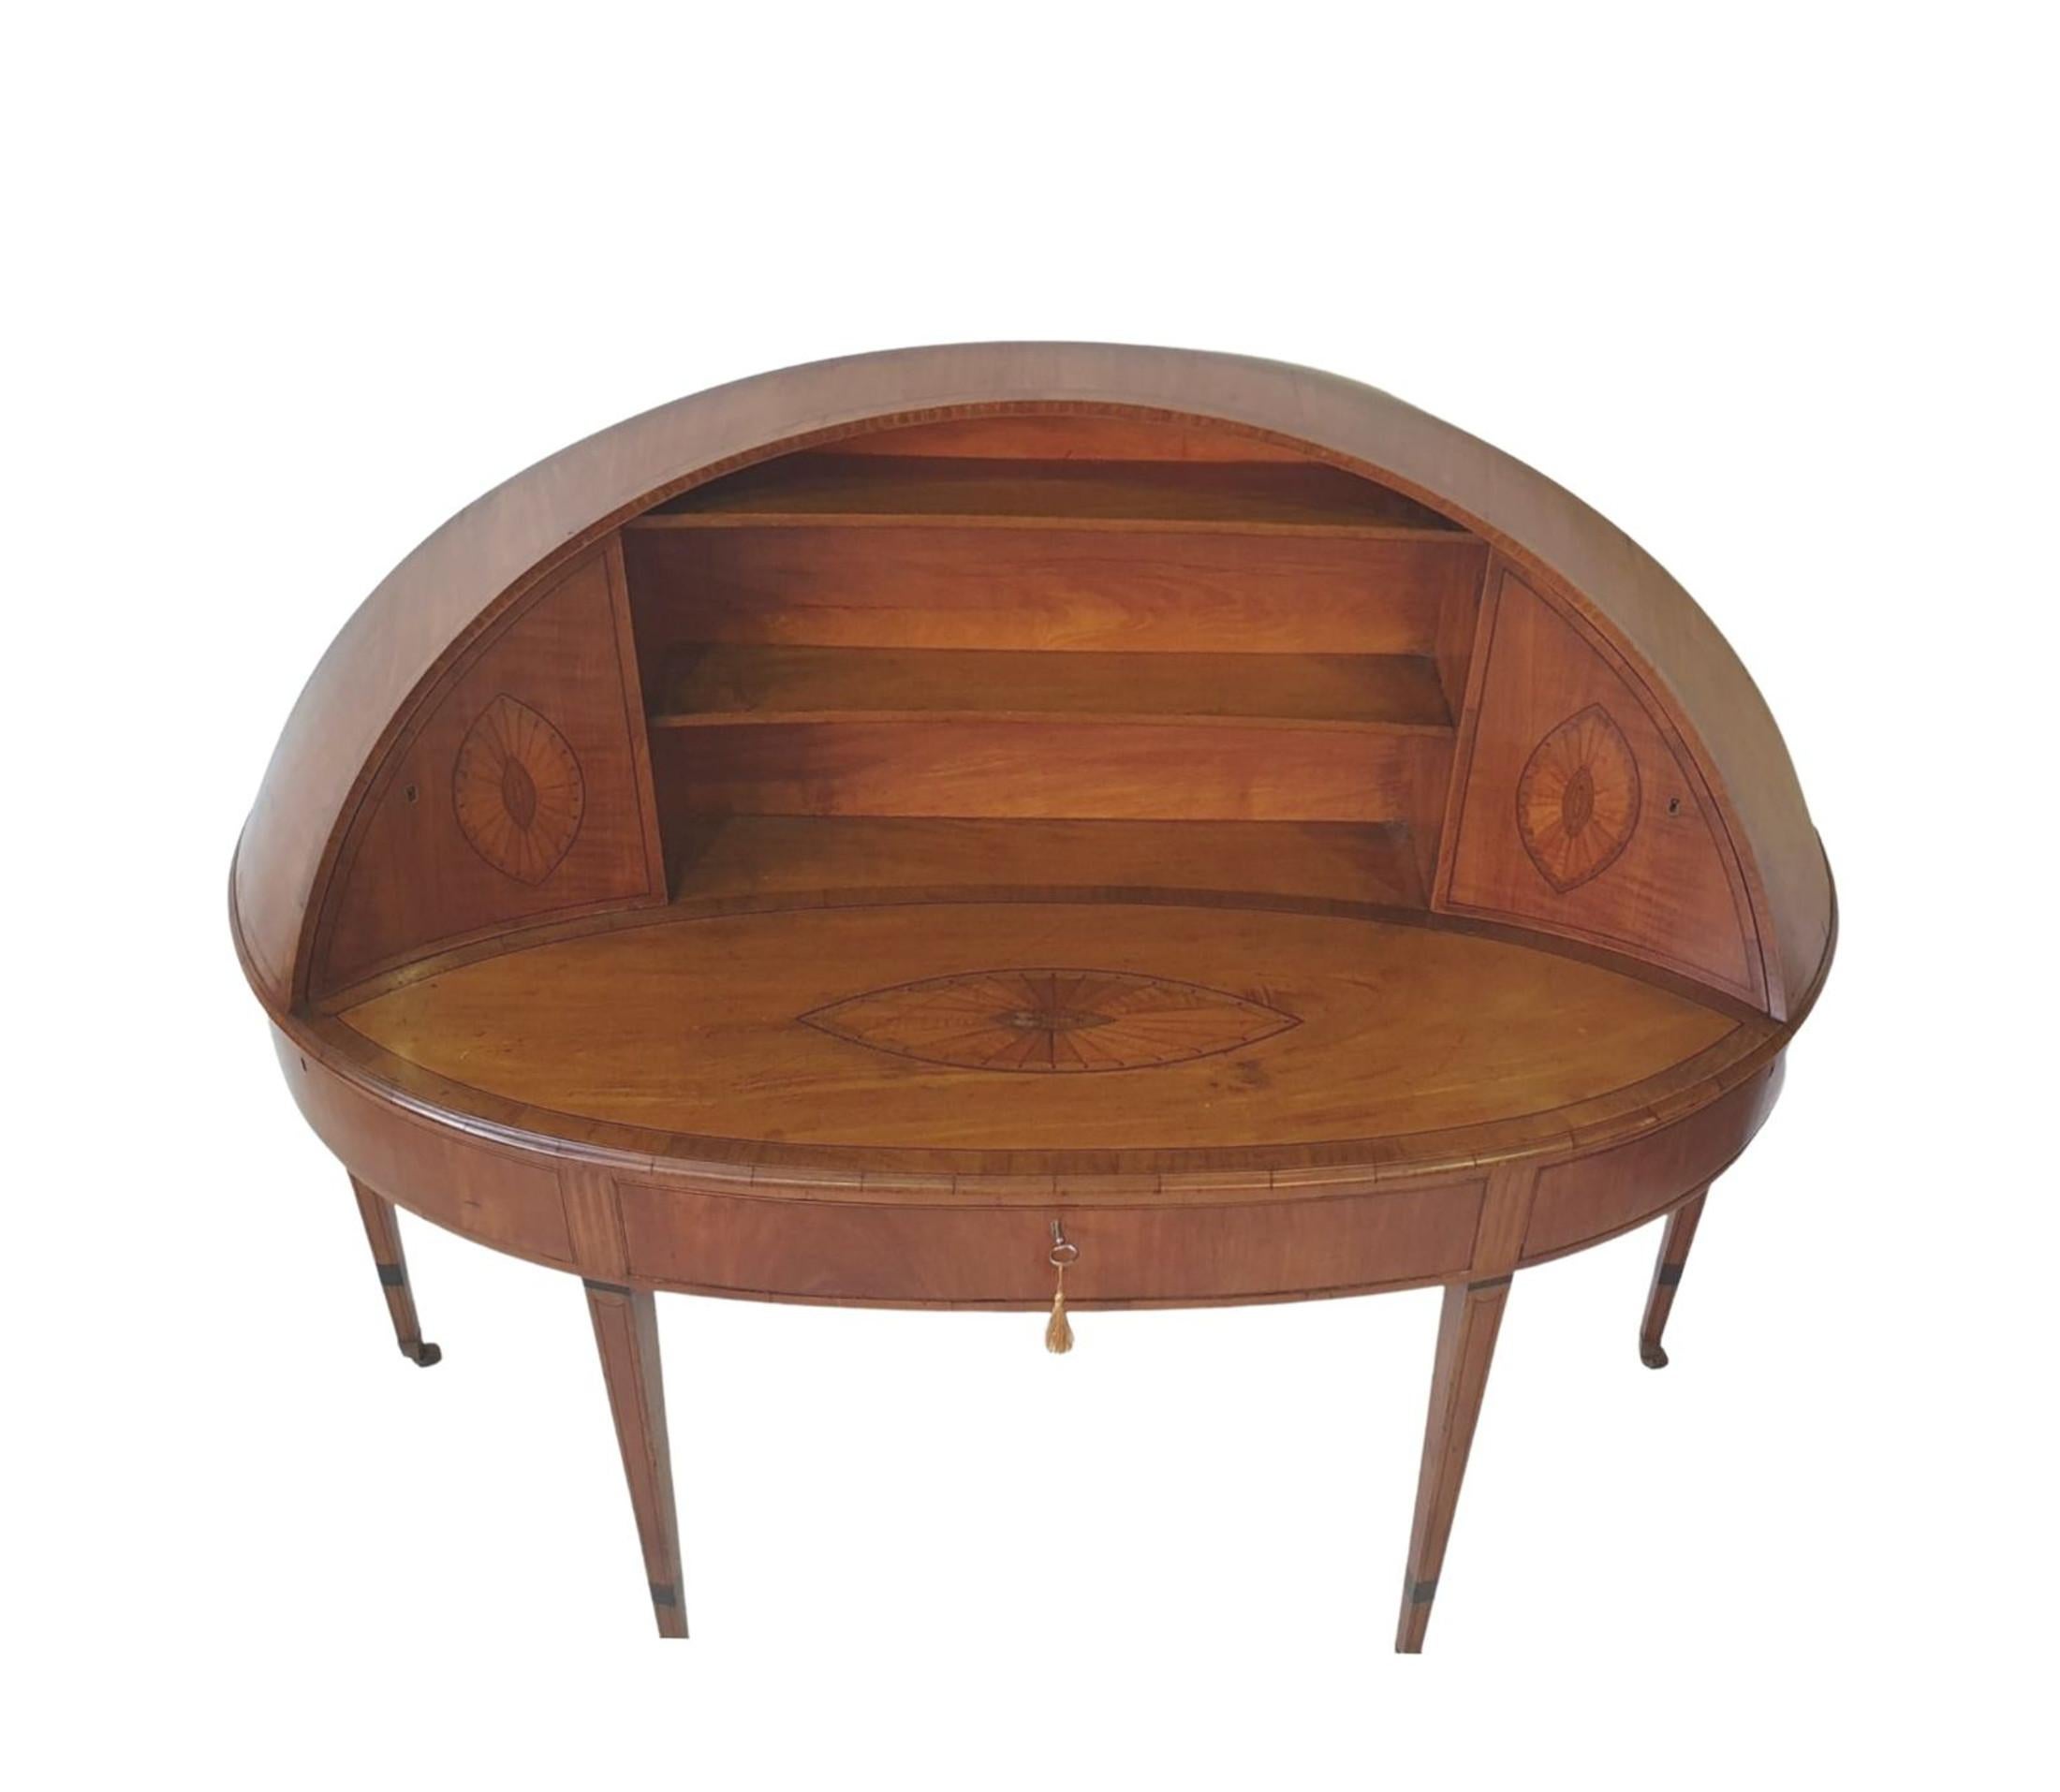 Rare 19th Century Inlaid Satinwood Sheraton Design Carlton House Desk For Sale 1